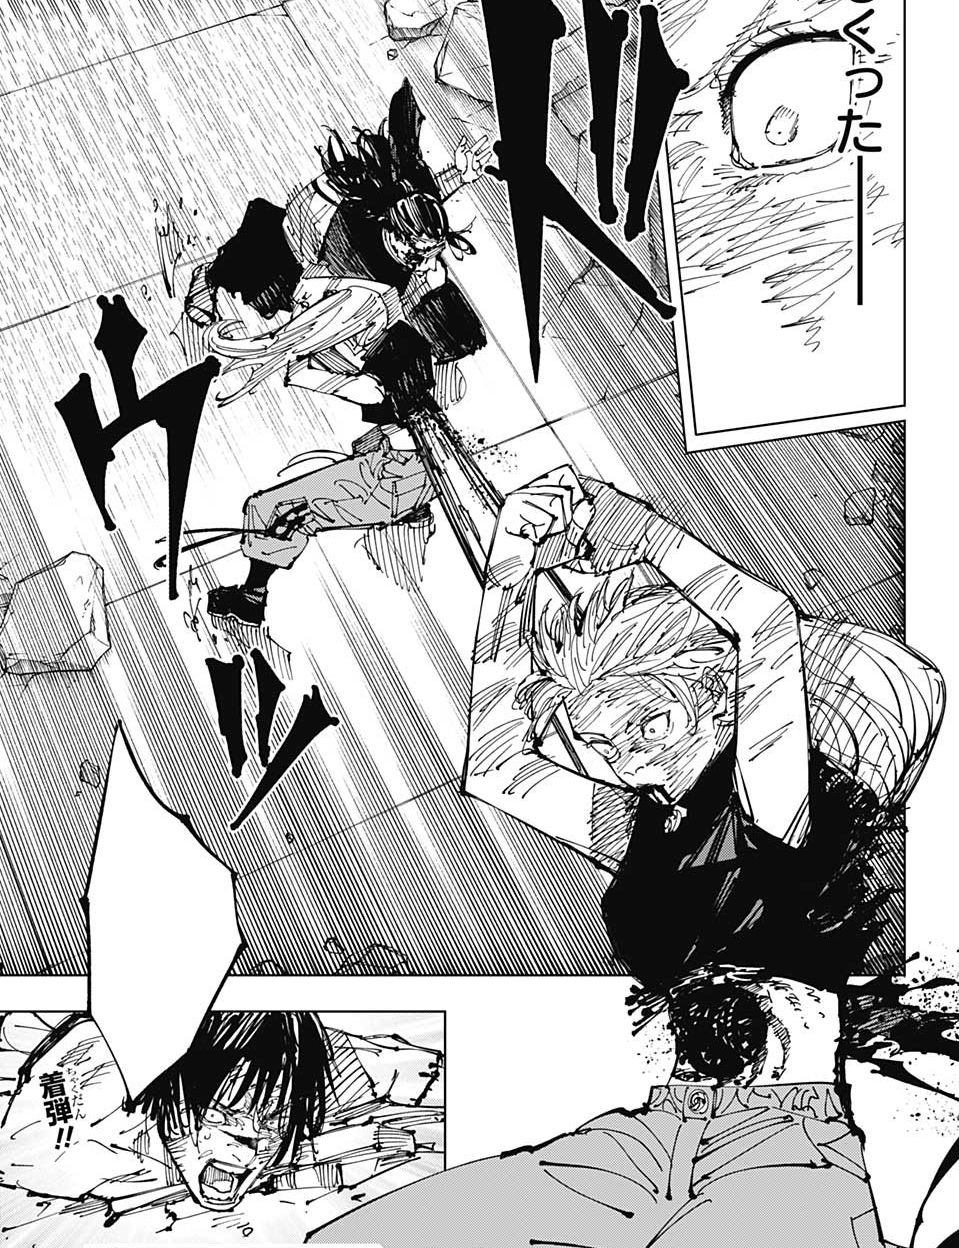 Jujutsu Kaisen: Kenjaku Just Played Right Into Yuki Tsukumo's Hands